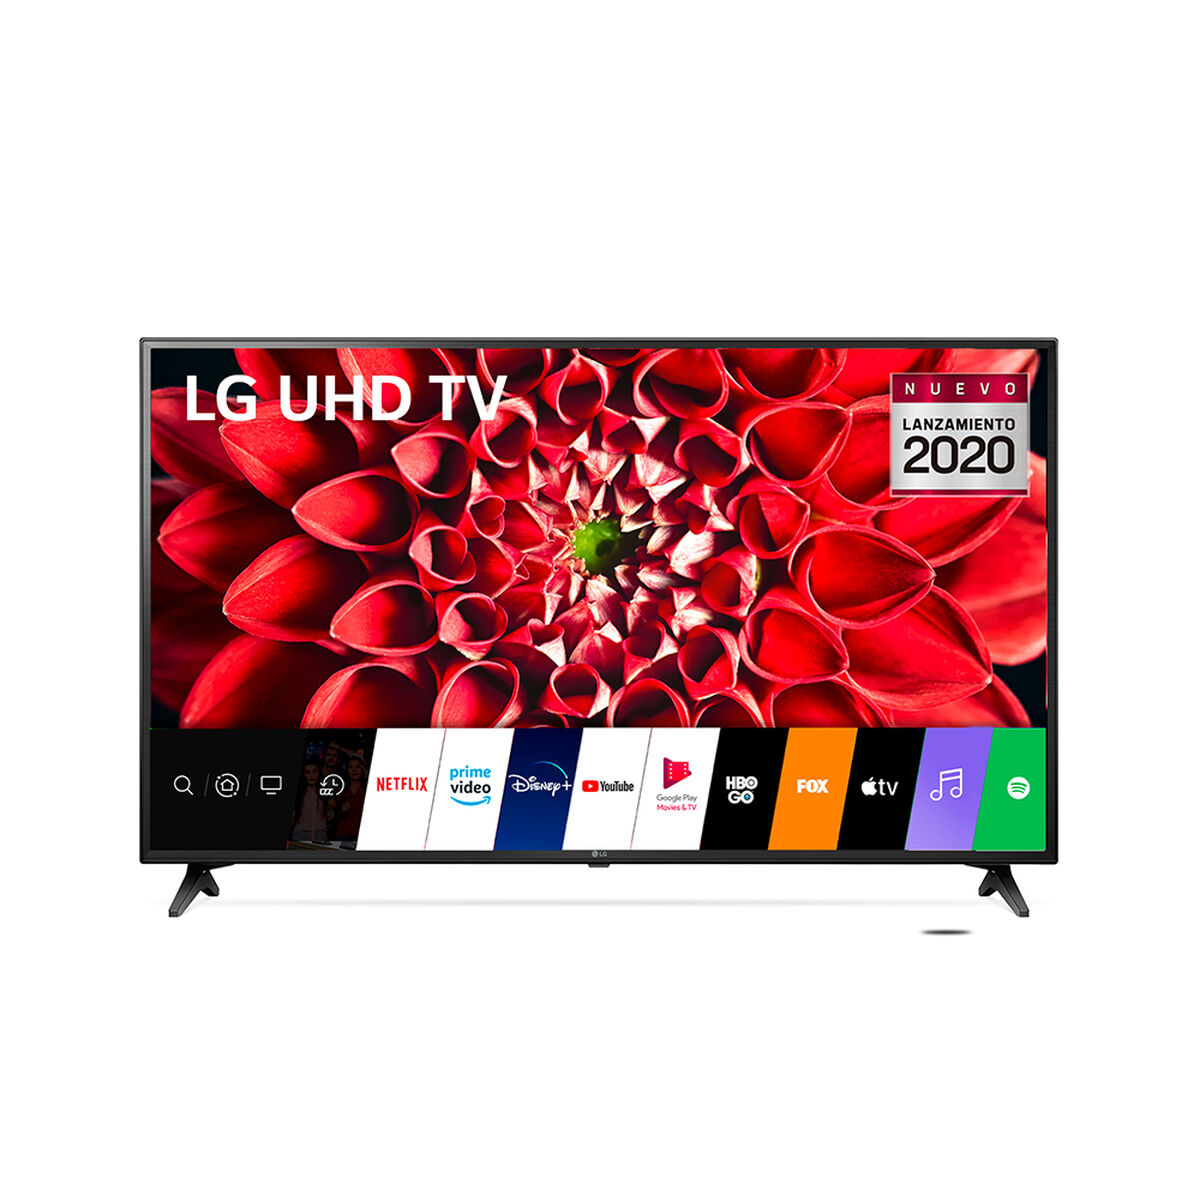 LED 65" LG 65UN7100 Smart TV 4K UHD